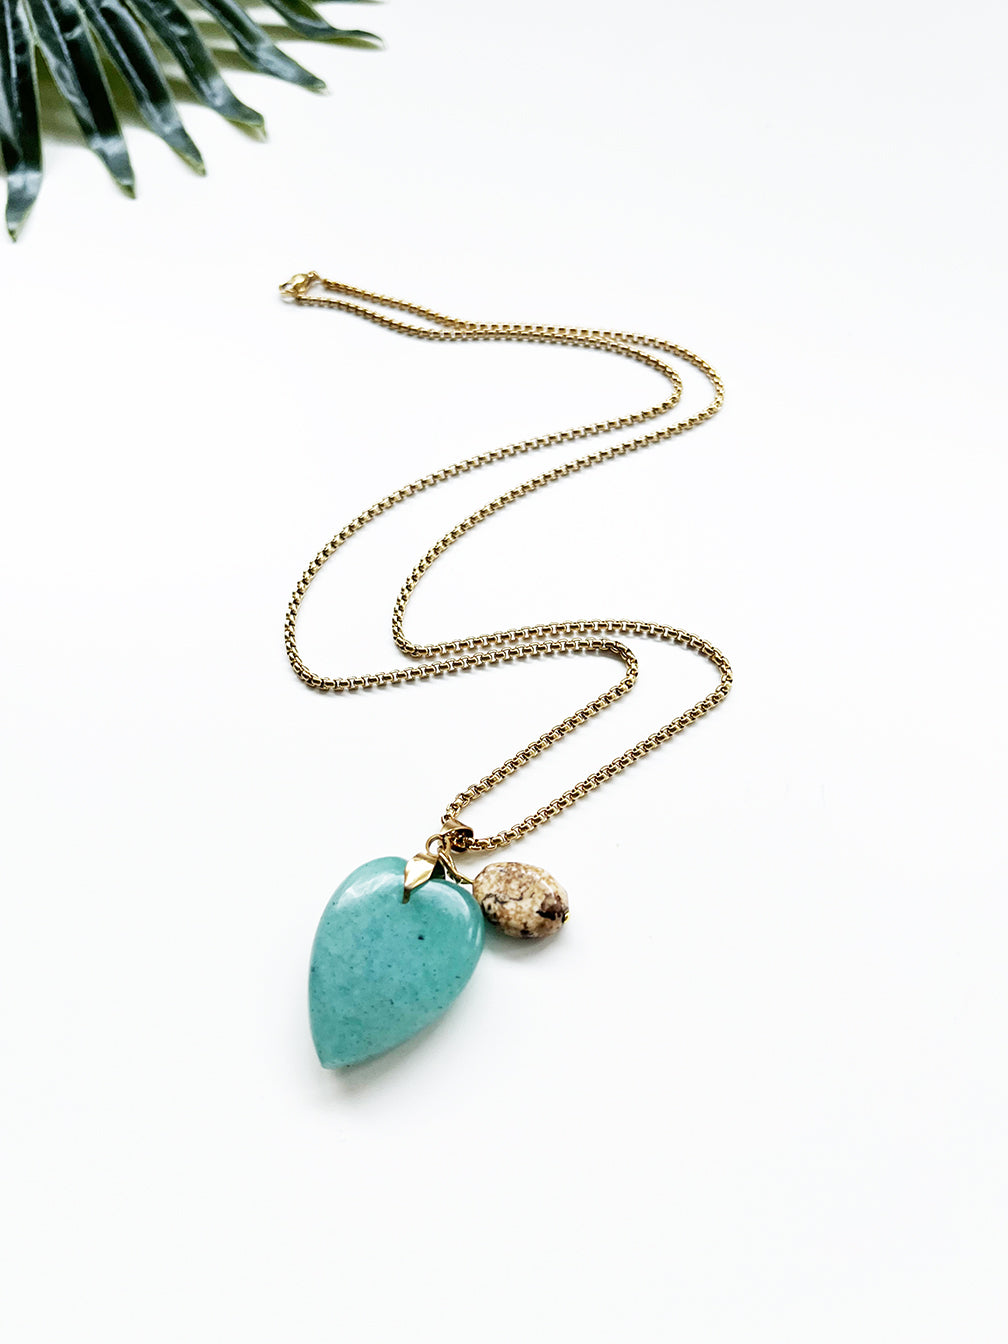 touchstone necklace - amazonite and picture jasper